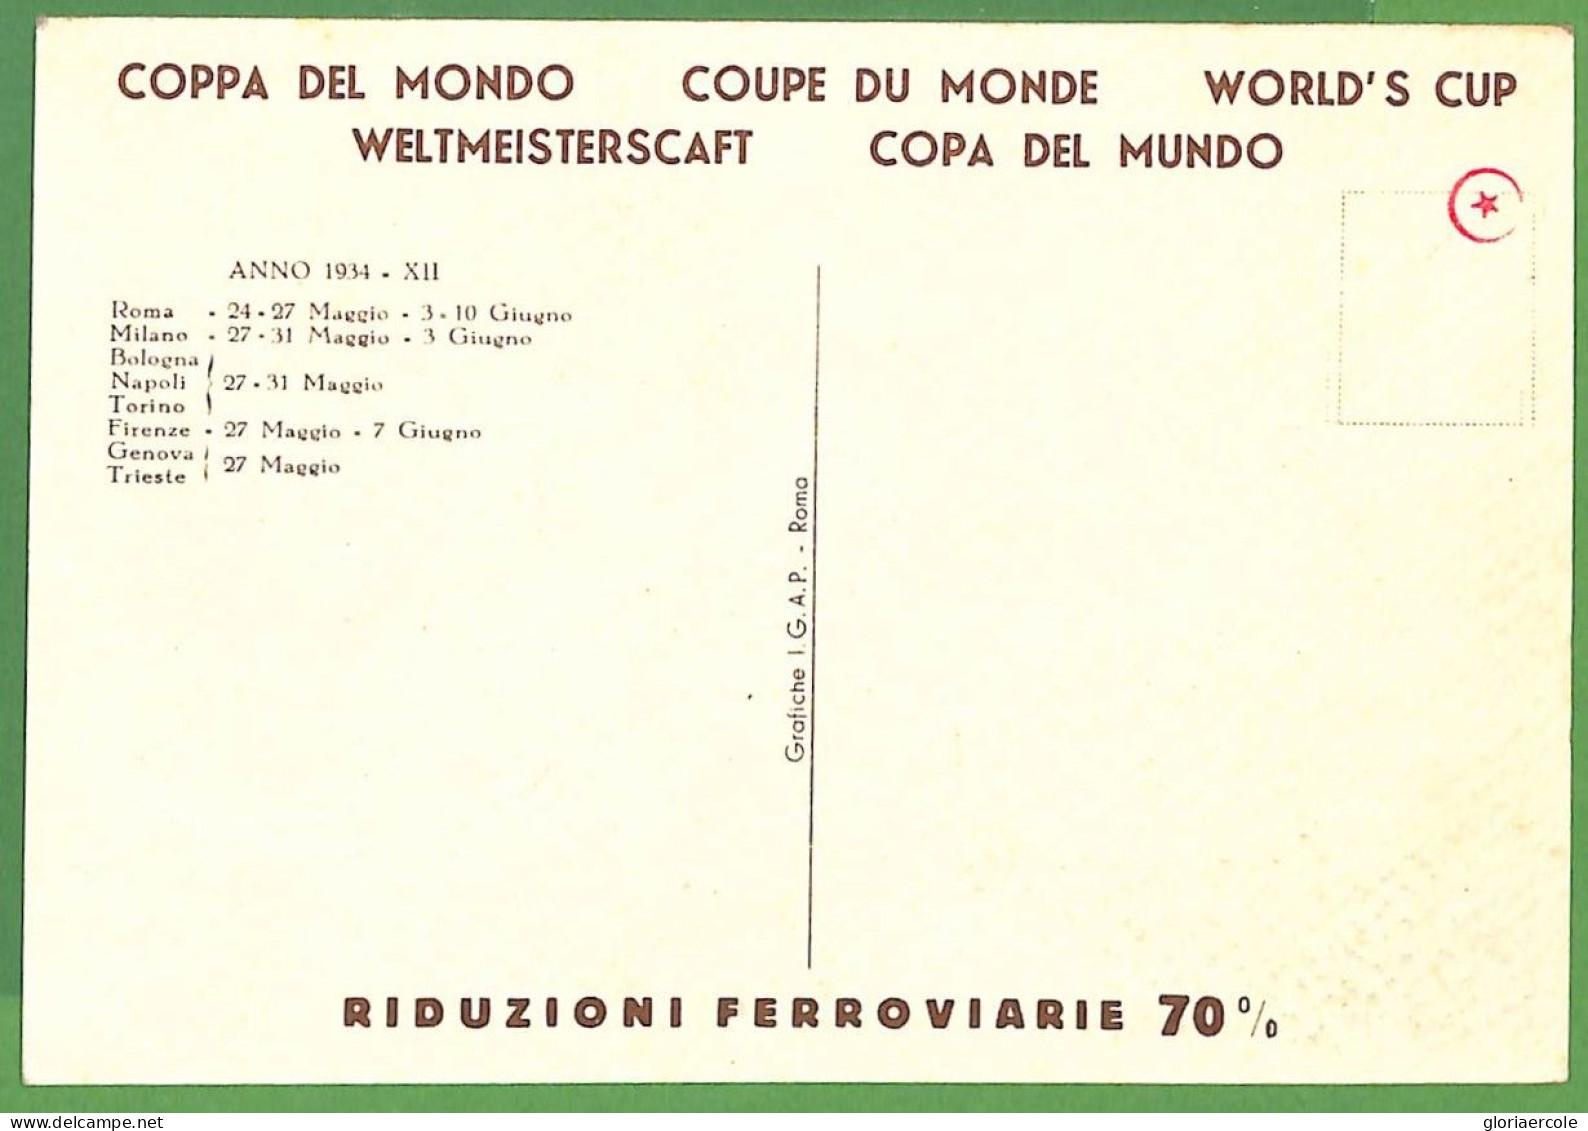 Aa5659 - ITALY - Postal History - FOOTBALL 1934 FIFA Postcard - Signed MARTINATI - UEFA European Championship